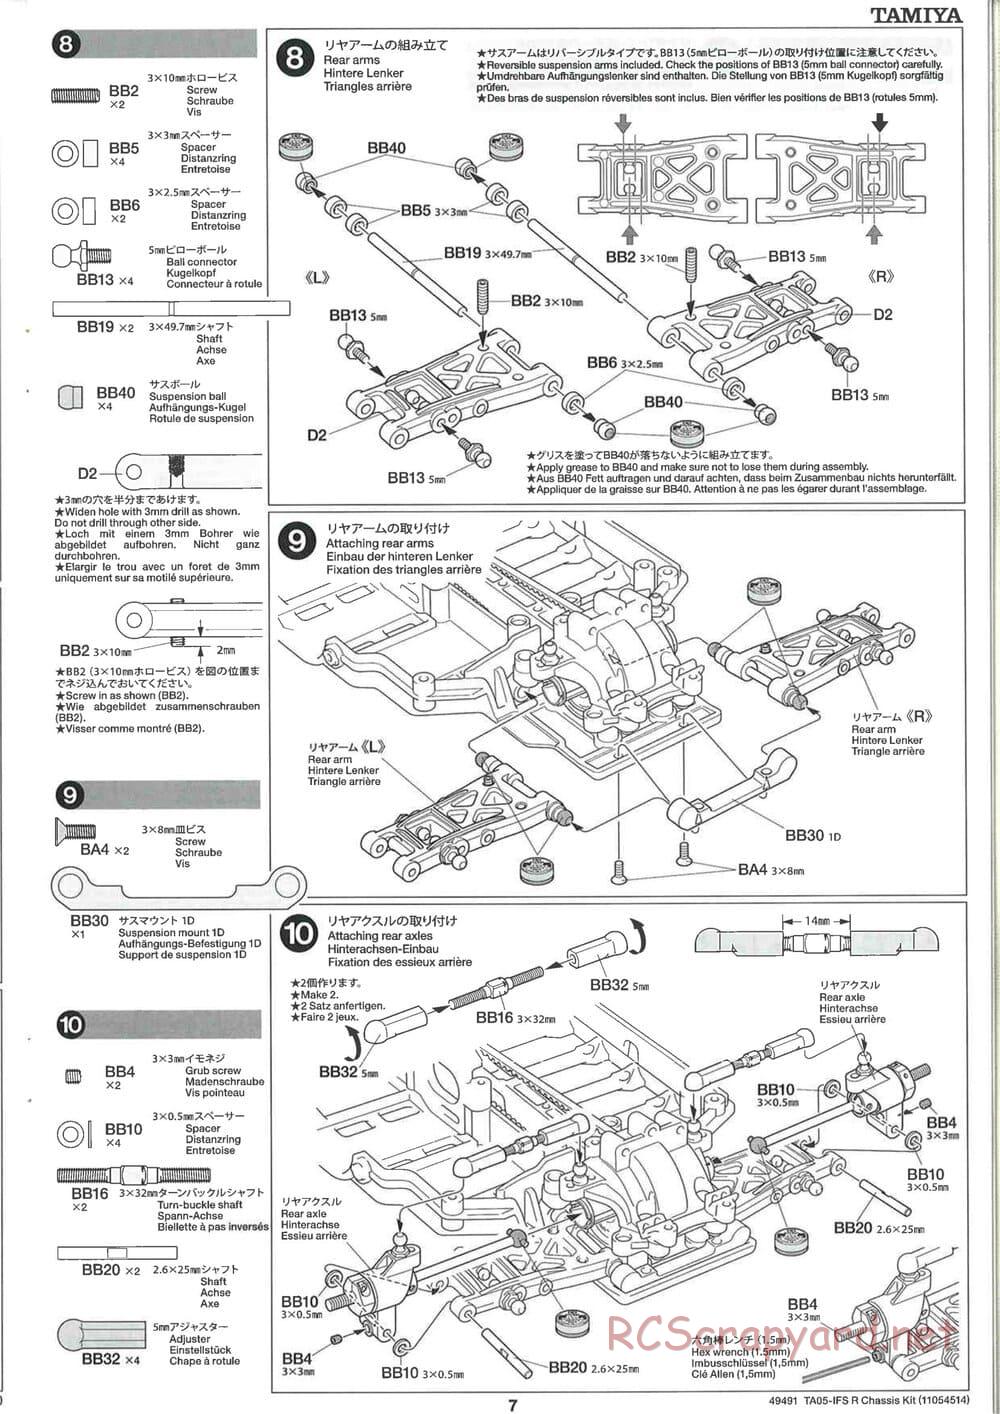 Tamiya - TA05-IFS R Chassis - Manual - Page 7